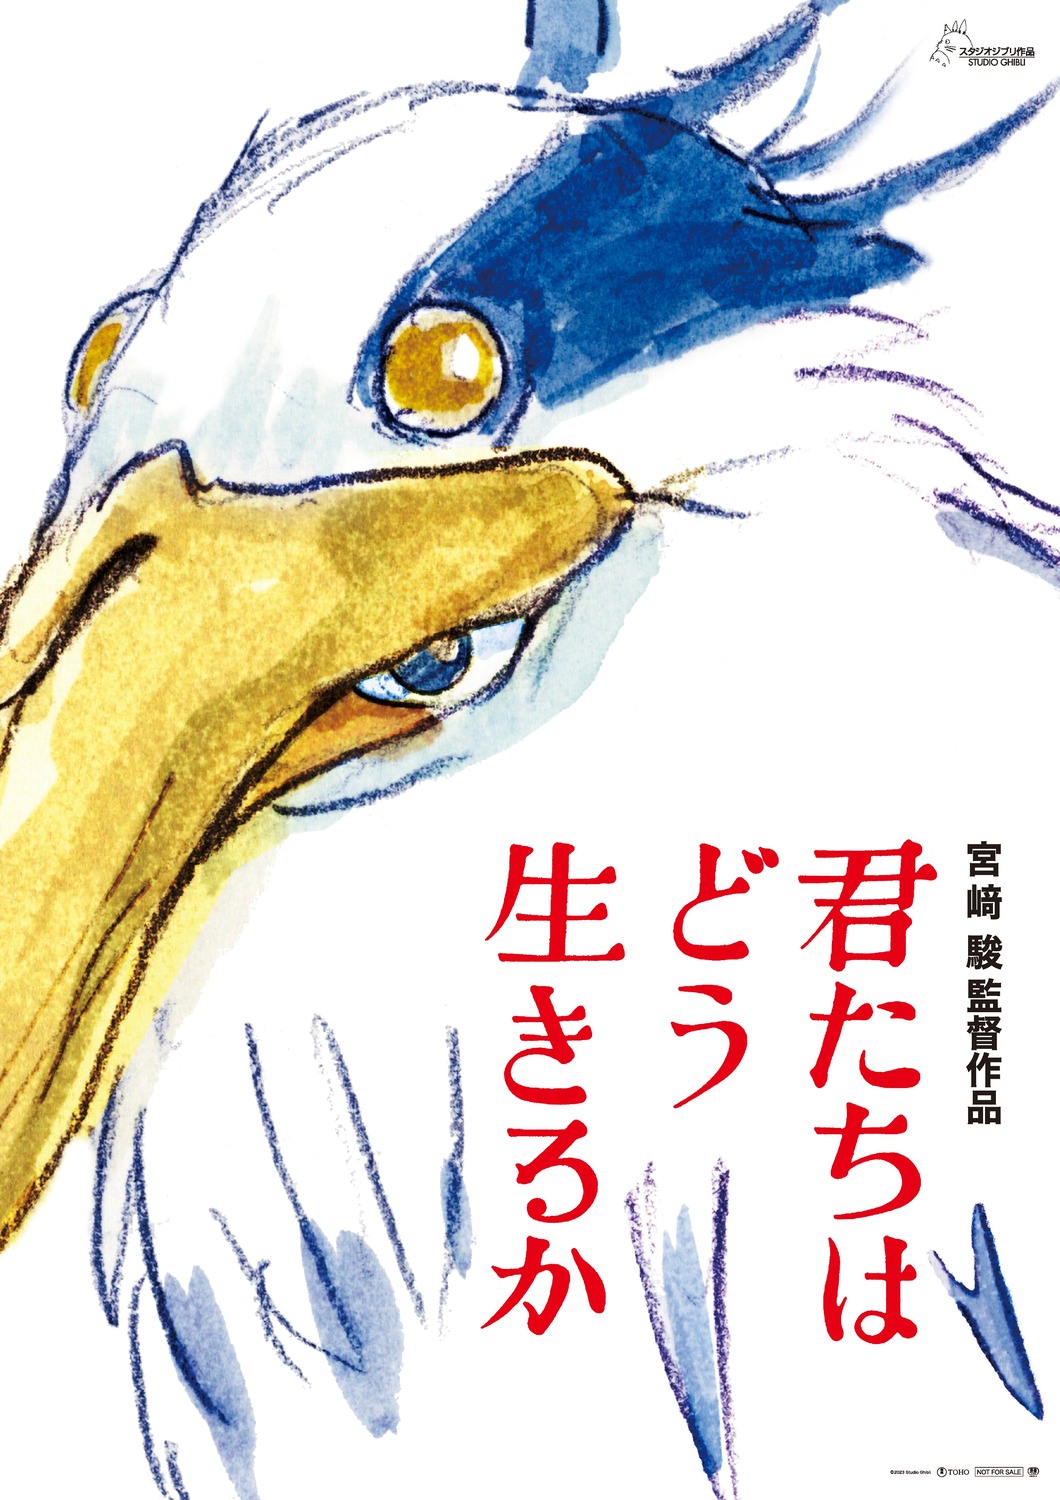 Extra Large Movie Poster Image for Kimitachi wa dô ikiru ka (#1 of 9)